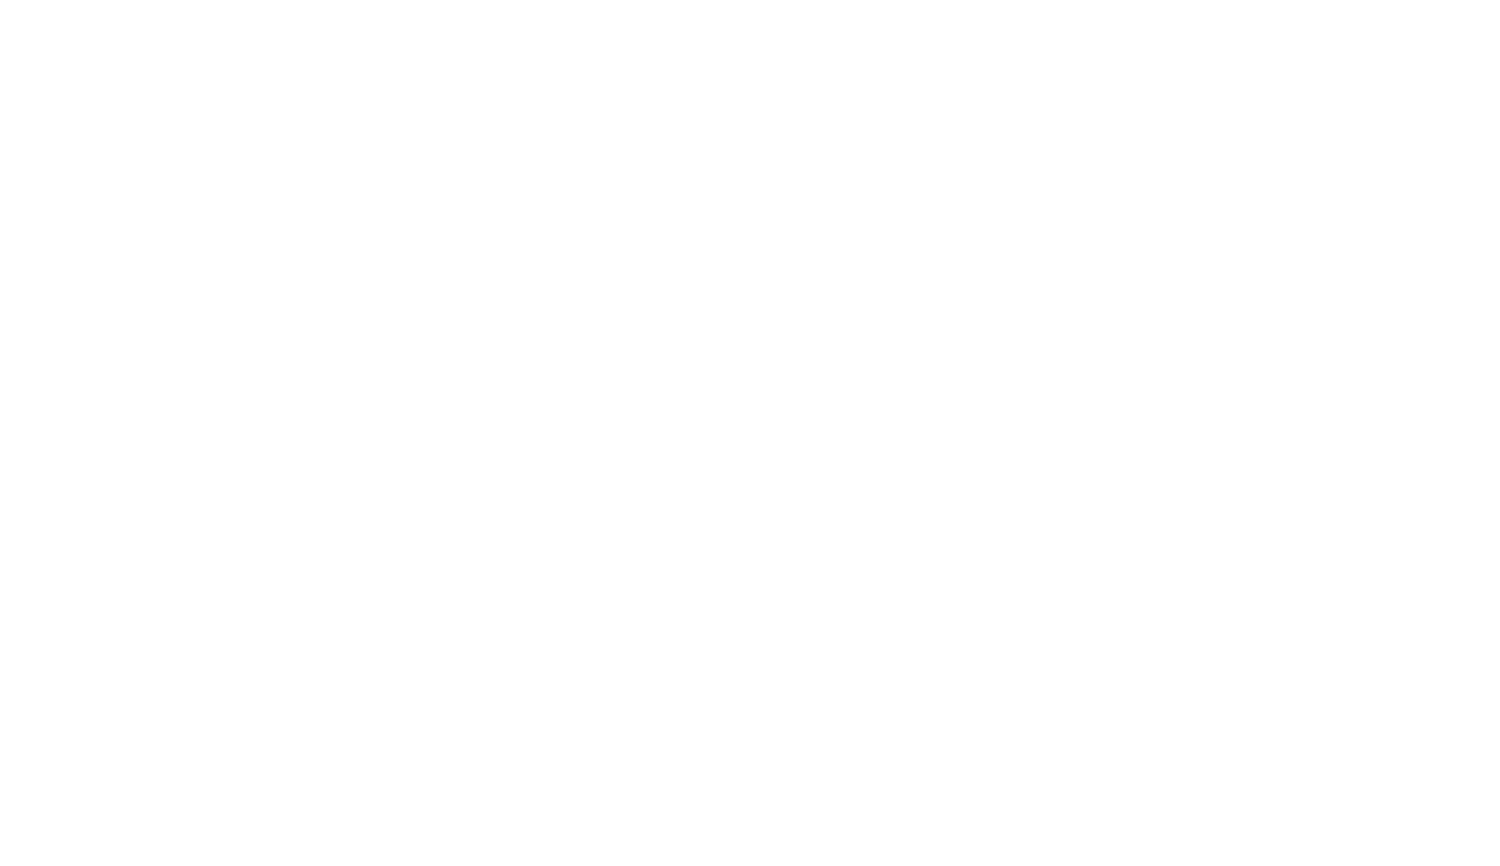  Gig Harbor Peninsula FISH Food Bank and Community Services